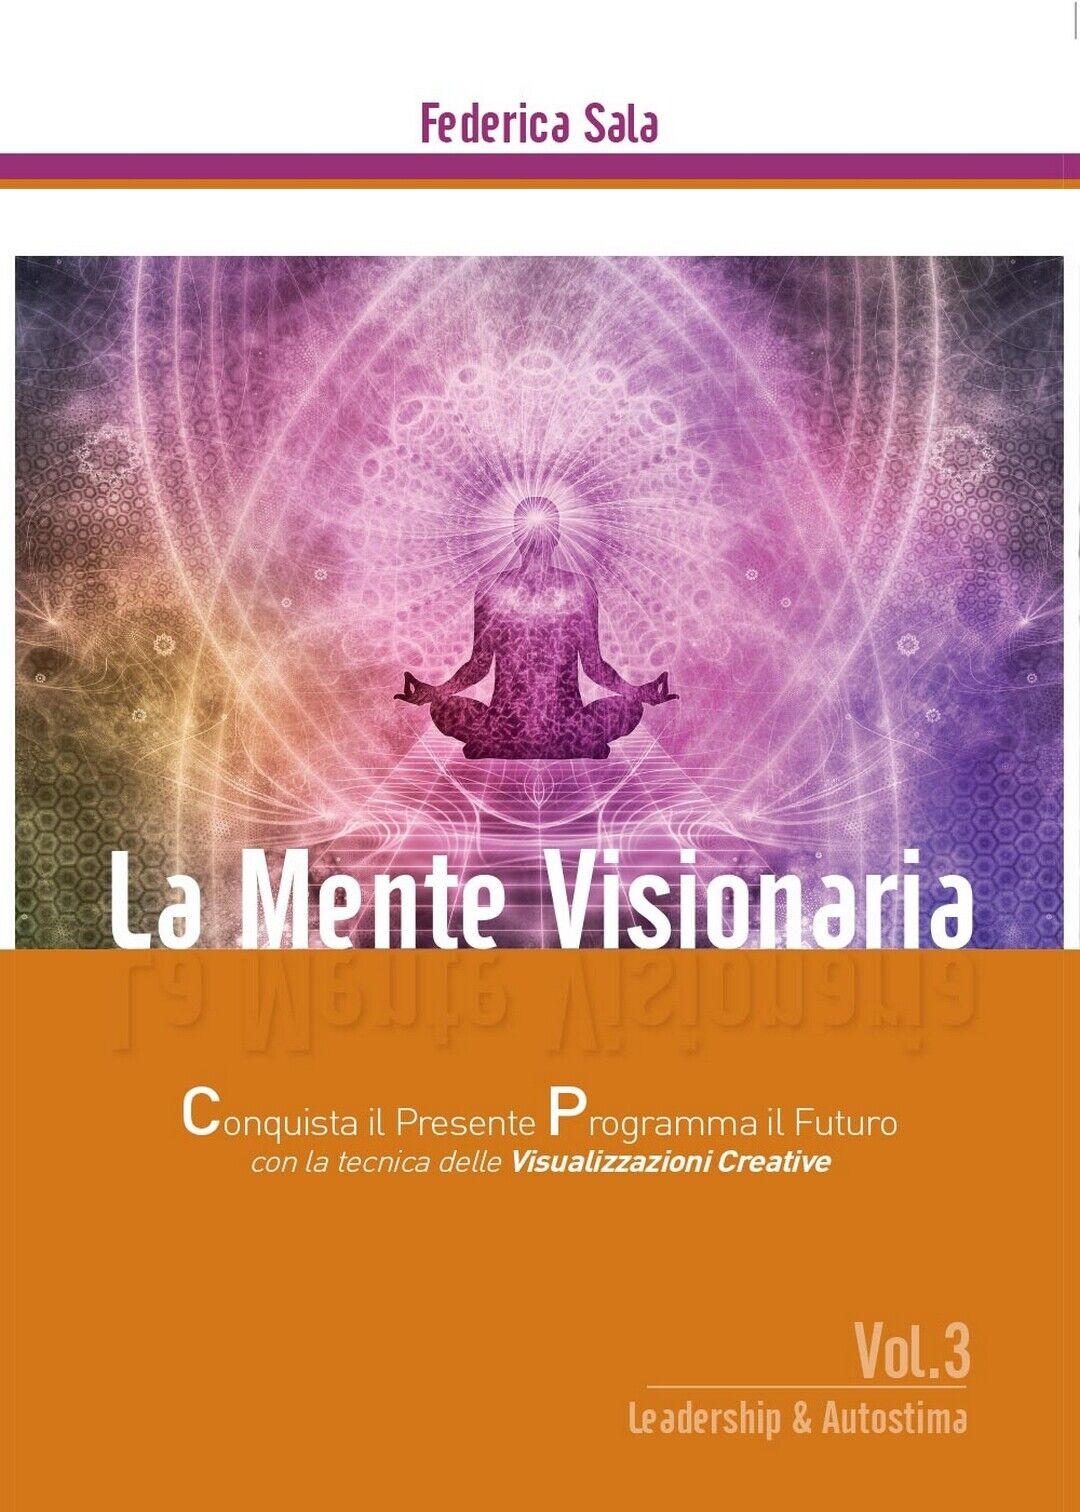 La Mente Visionaria Vol.3 Leadership & Autostima  di Federica Sala,  2016